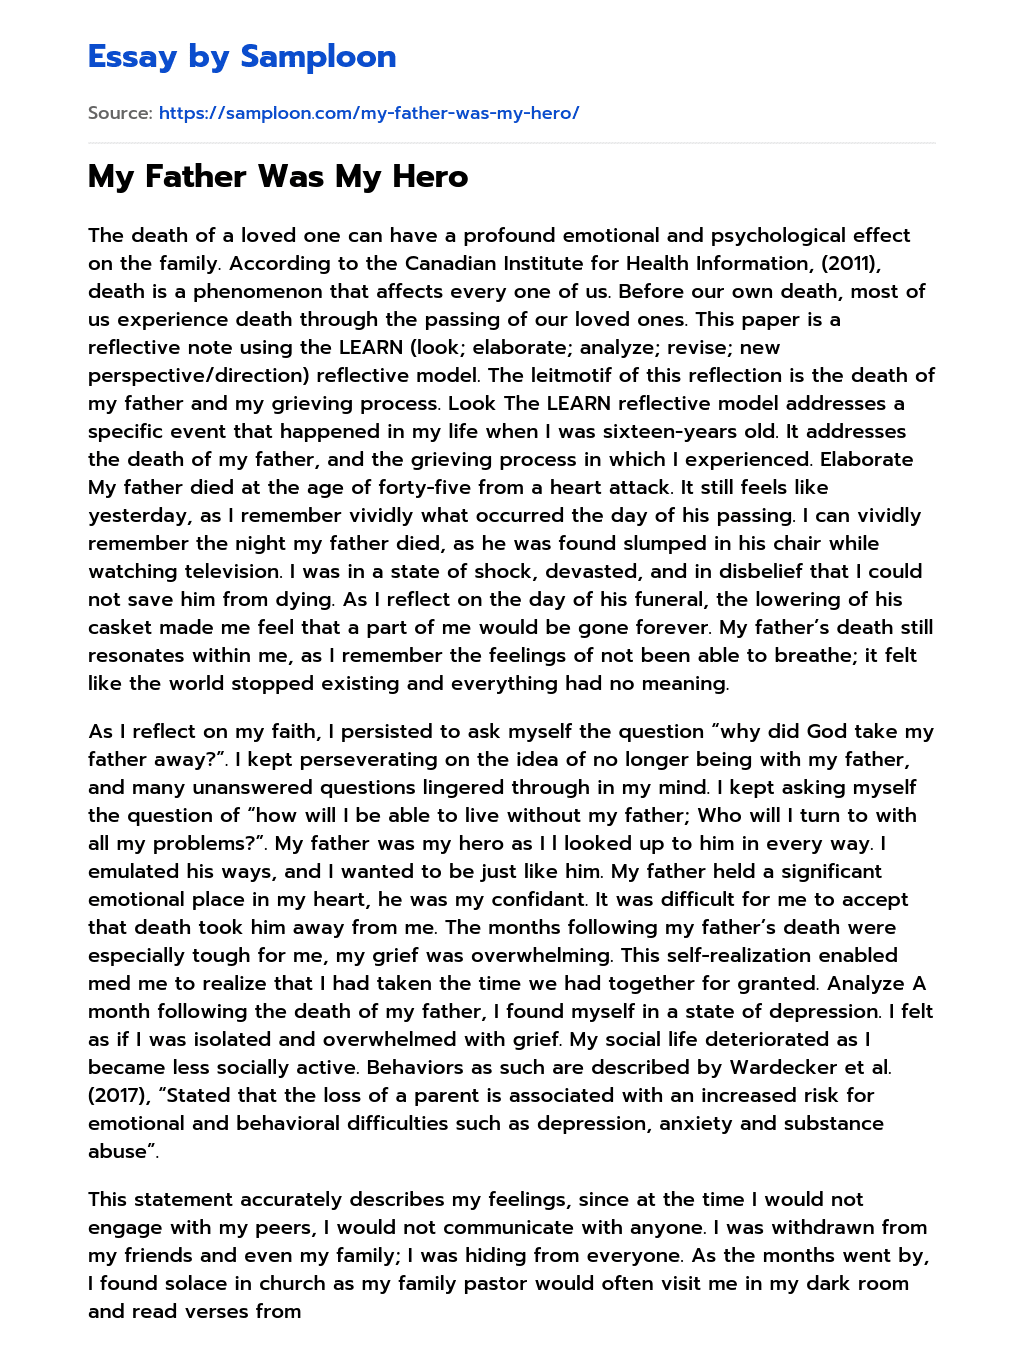 My Father Was My Hero essay